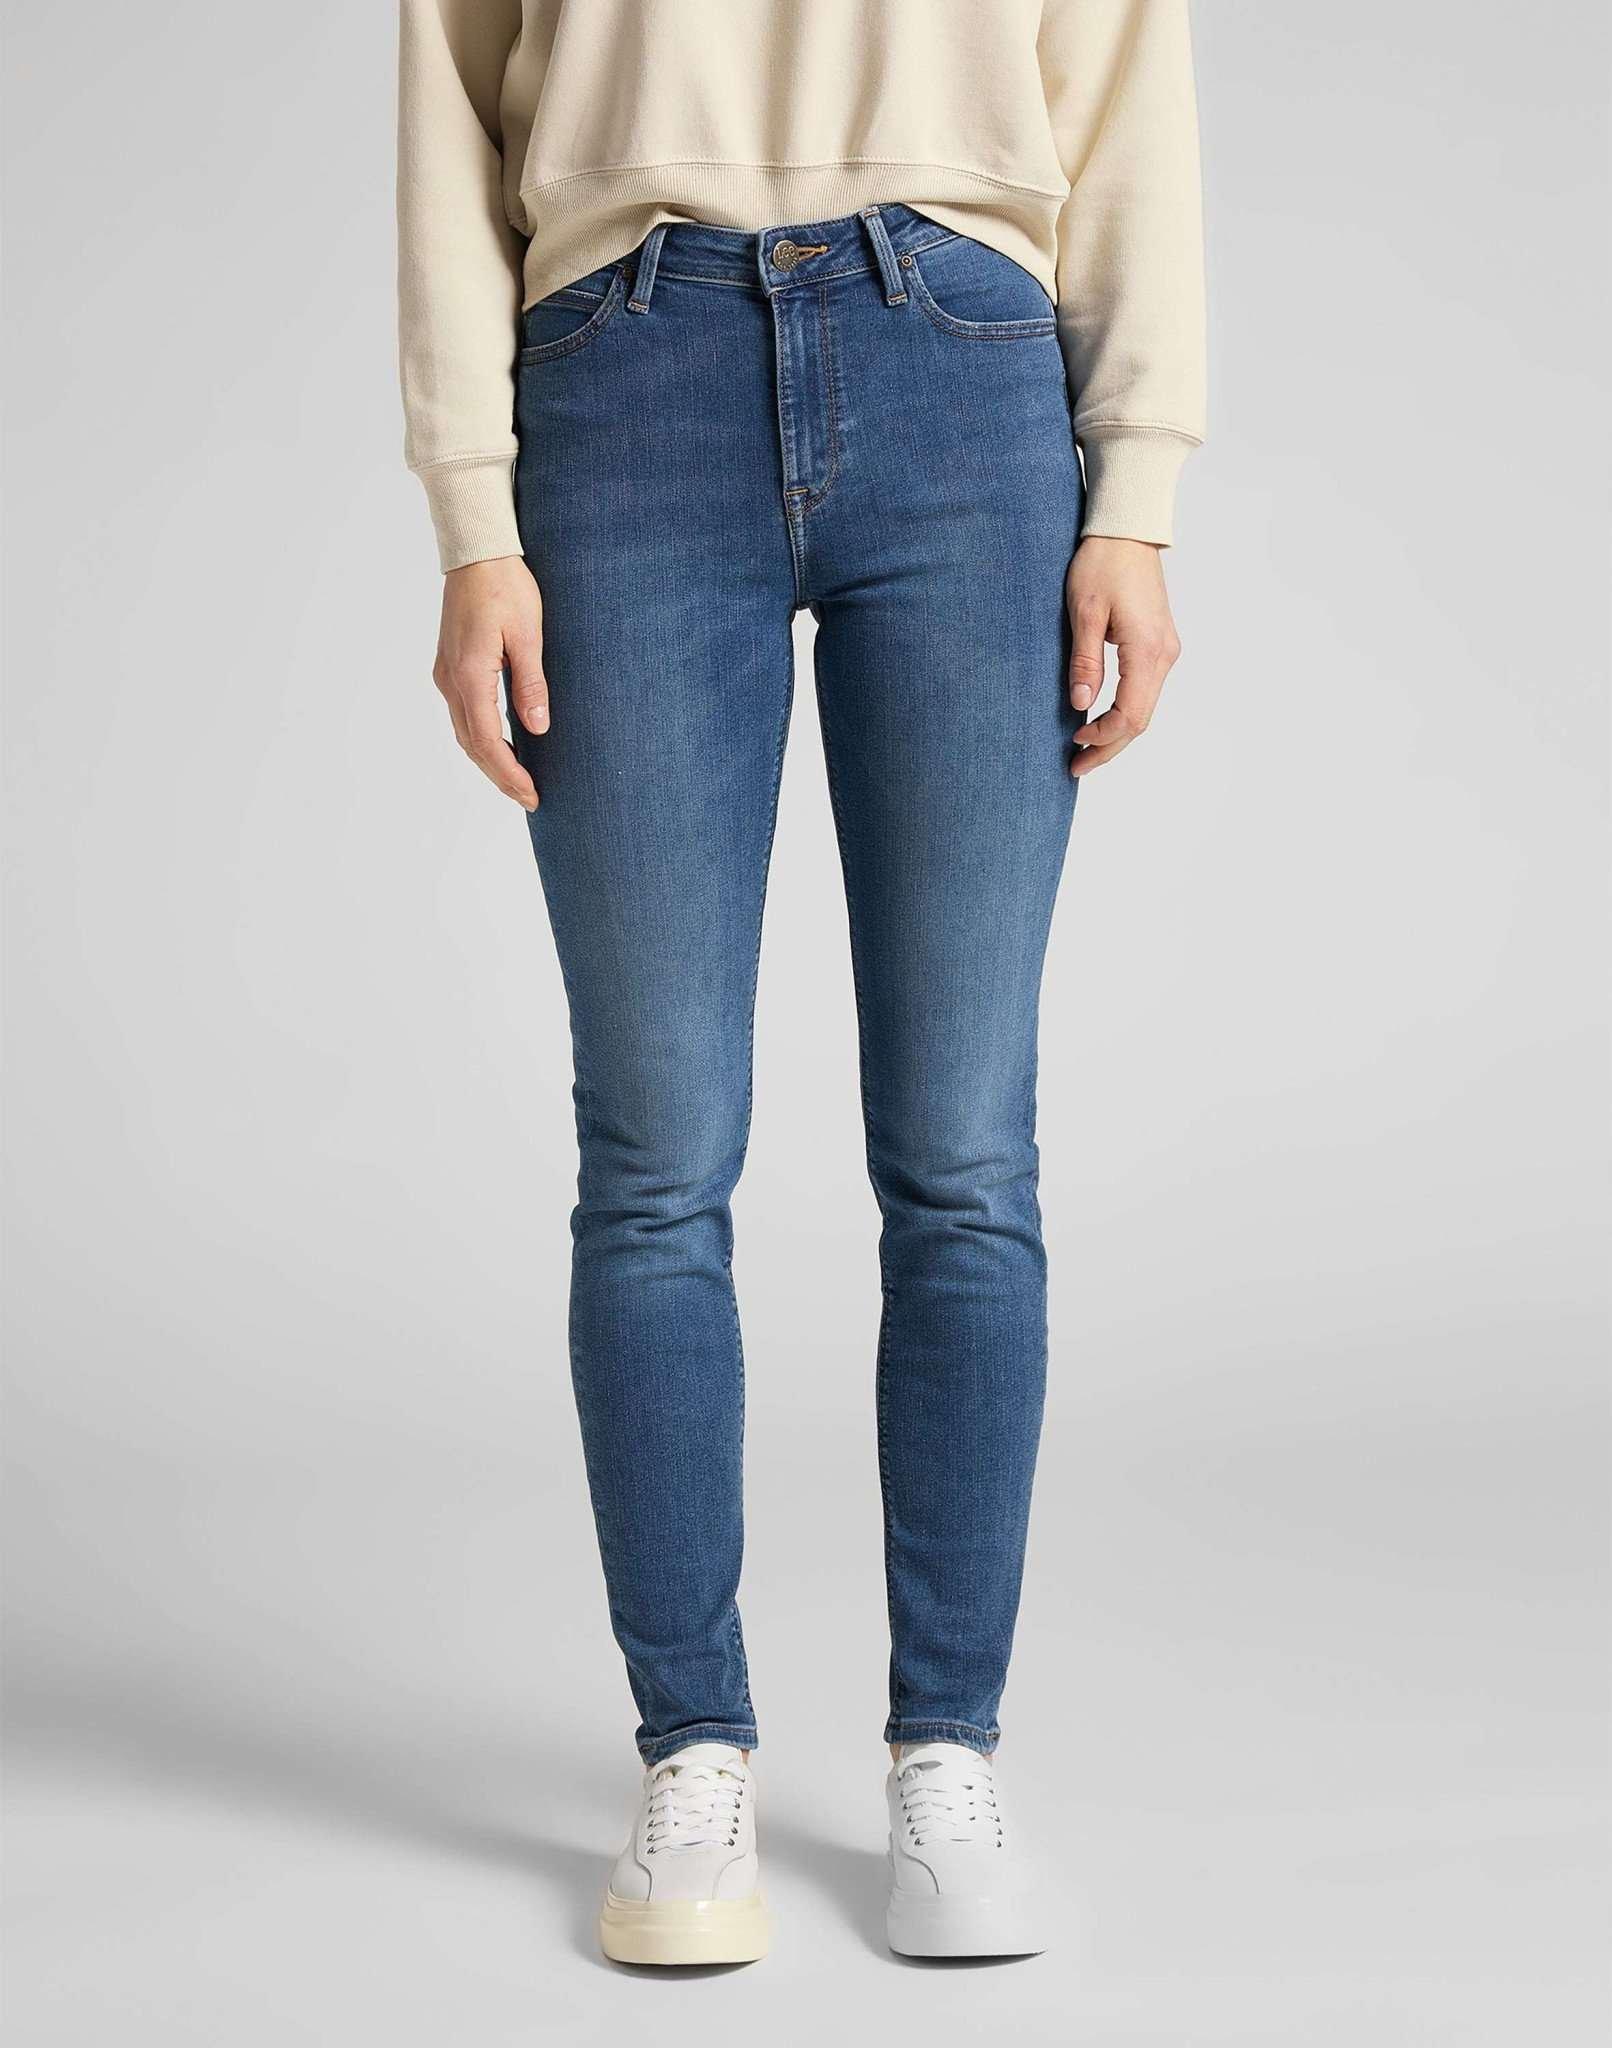 Jeans Skinny Fit Scarlett High Damen Blau Denim L33/W25 von Lee